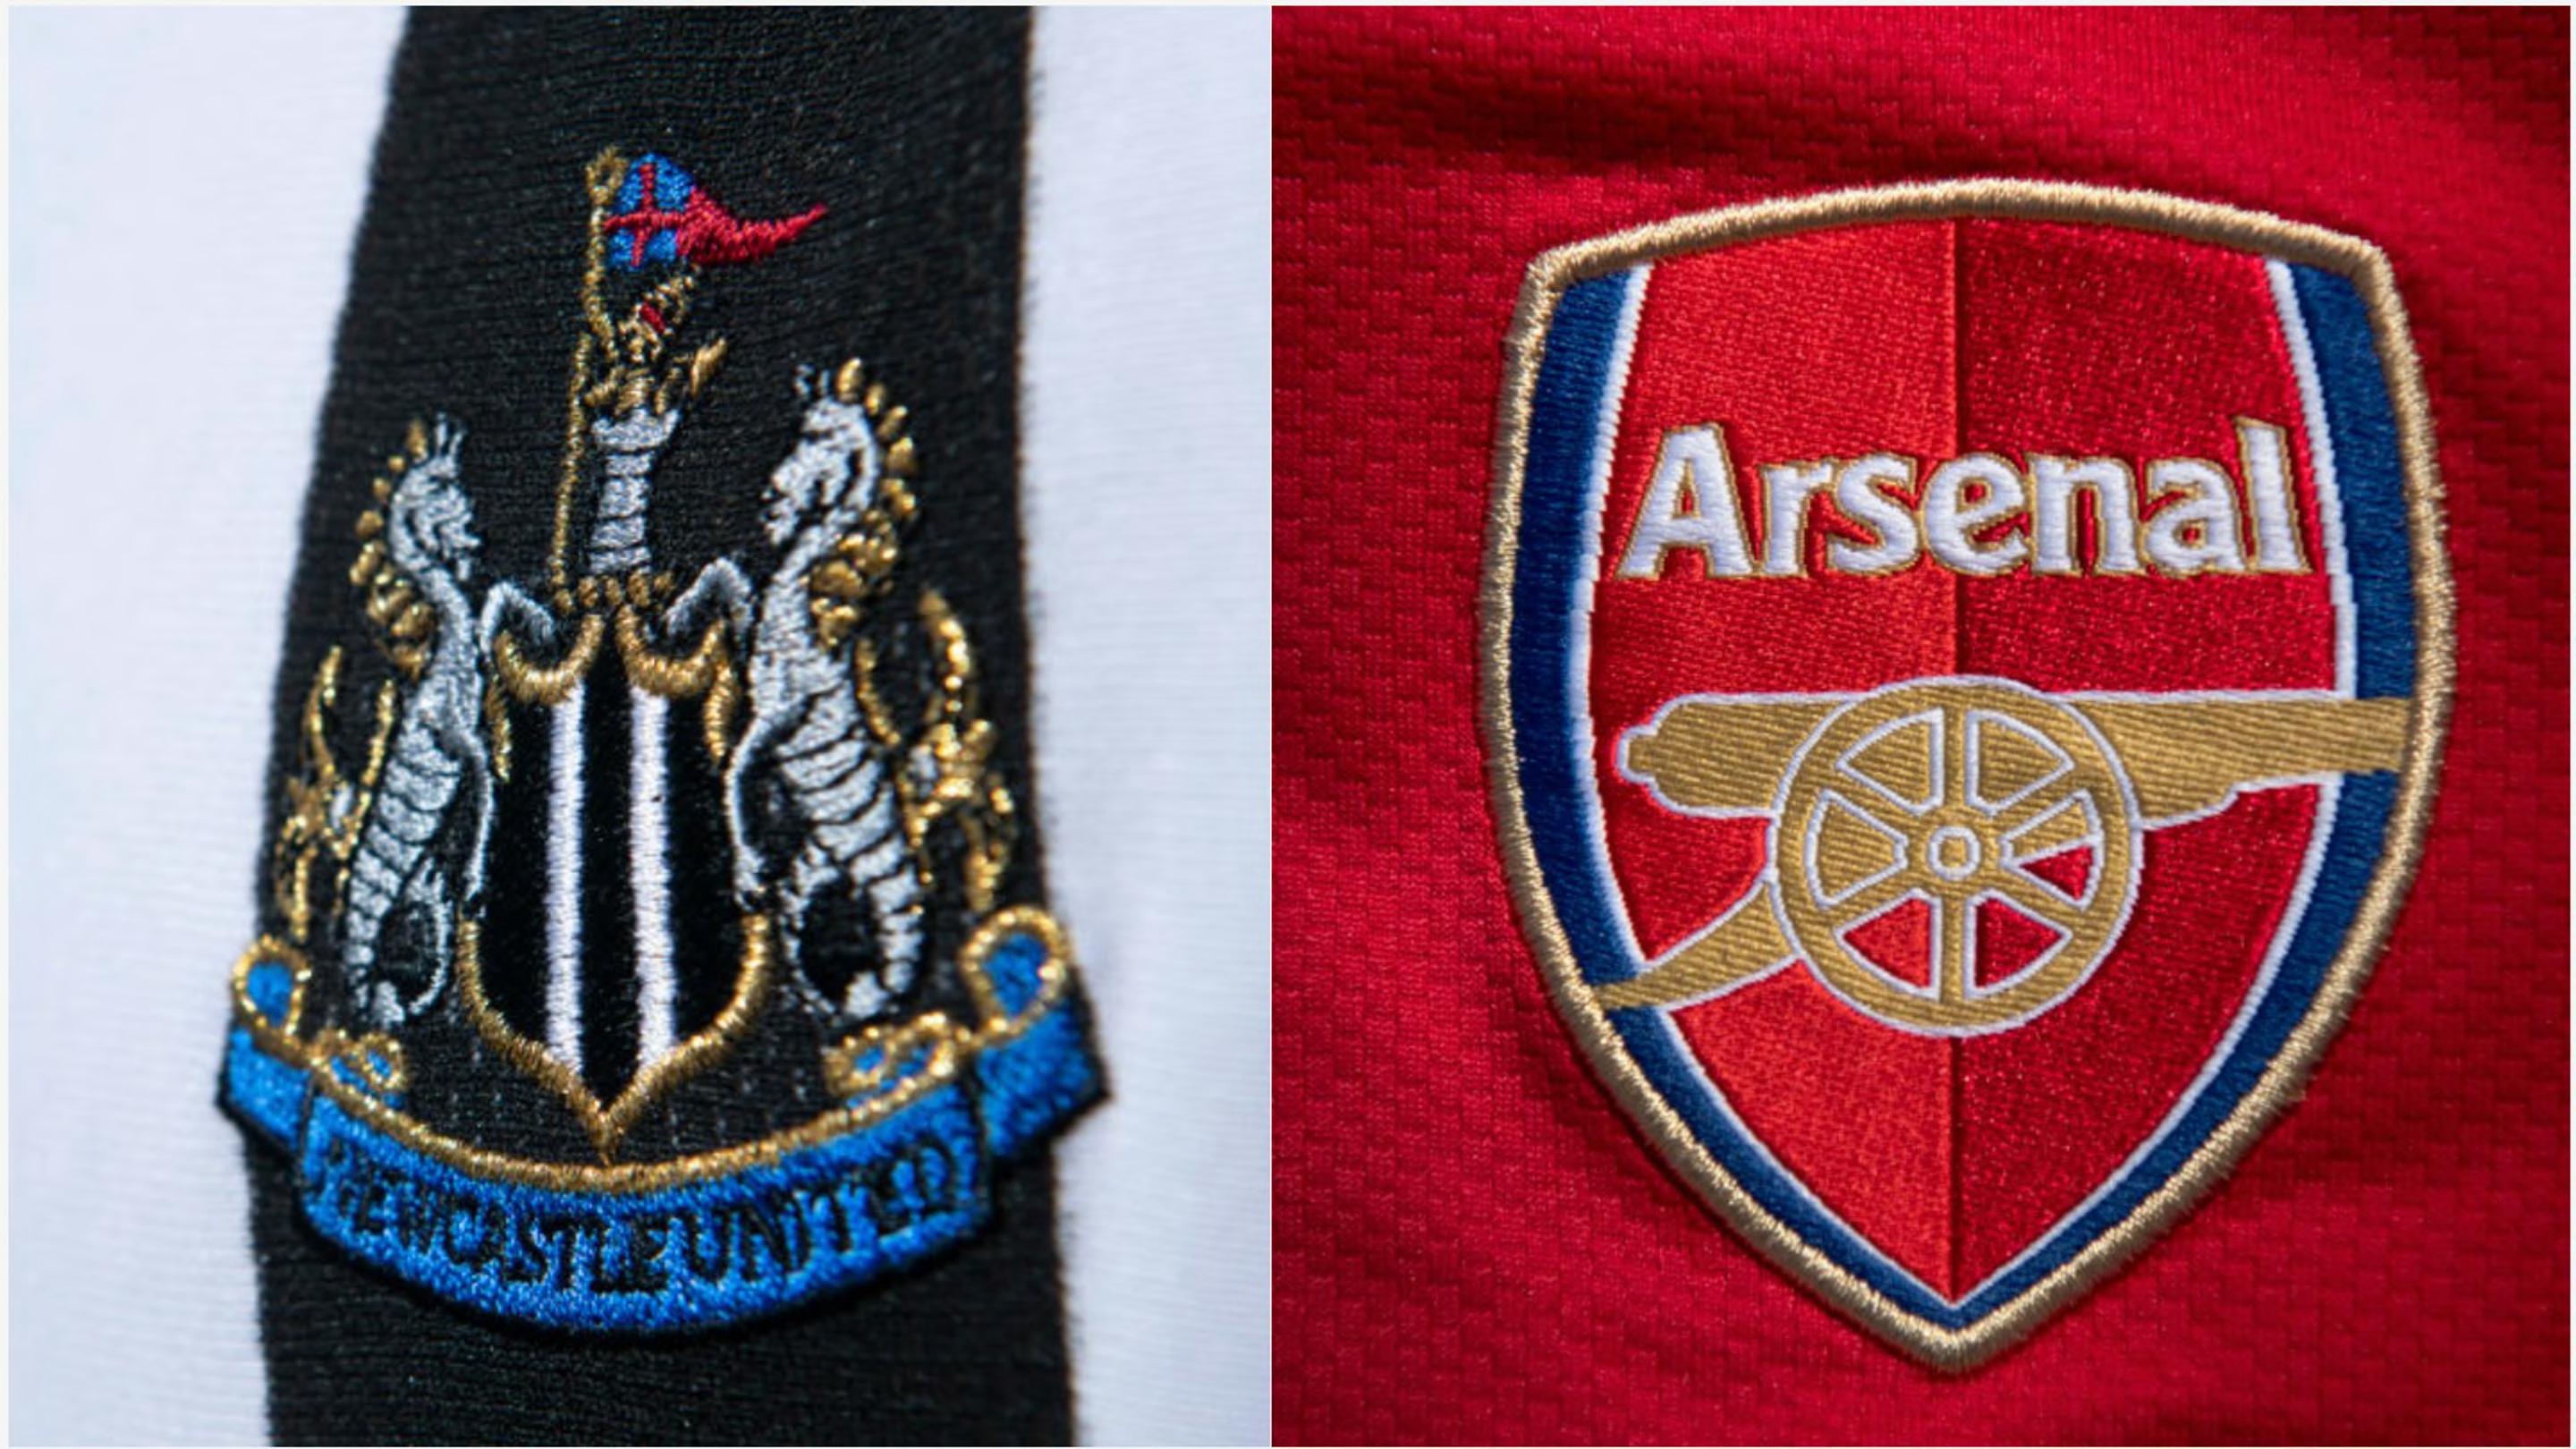 Arsenal vs Man Utd - Premier League: TV channel, team news, lineups &  prediction